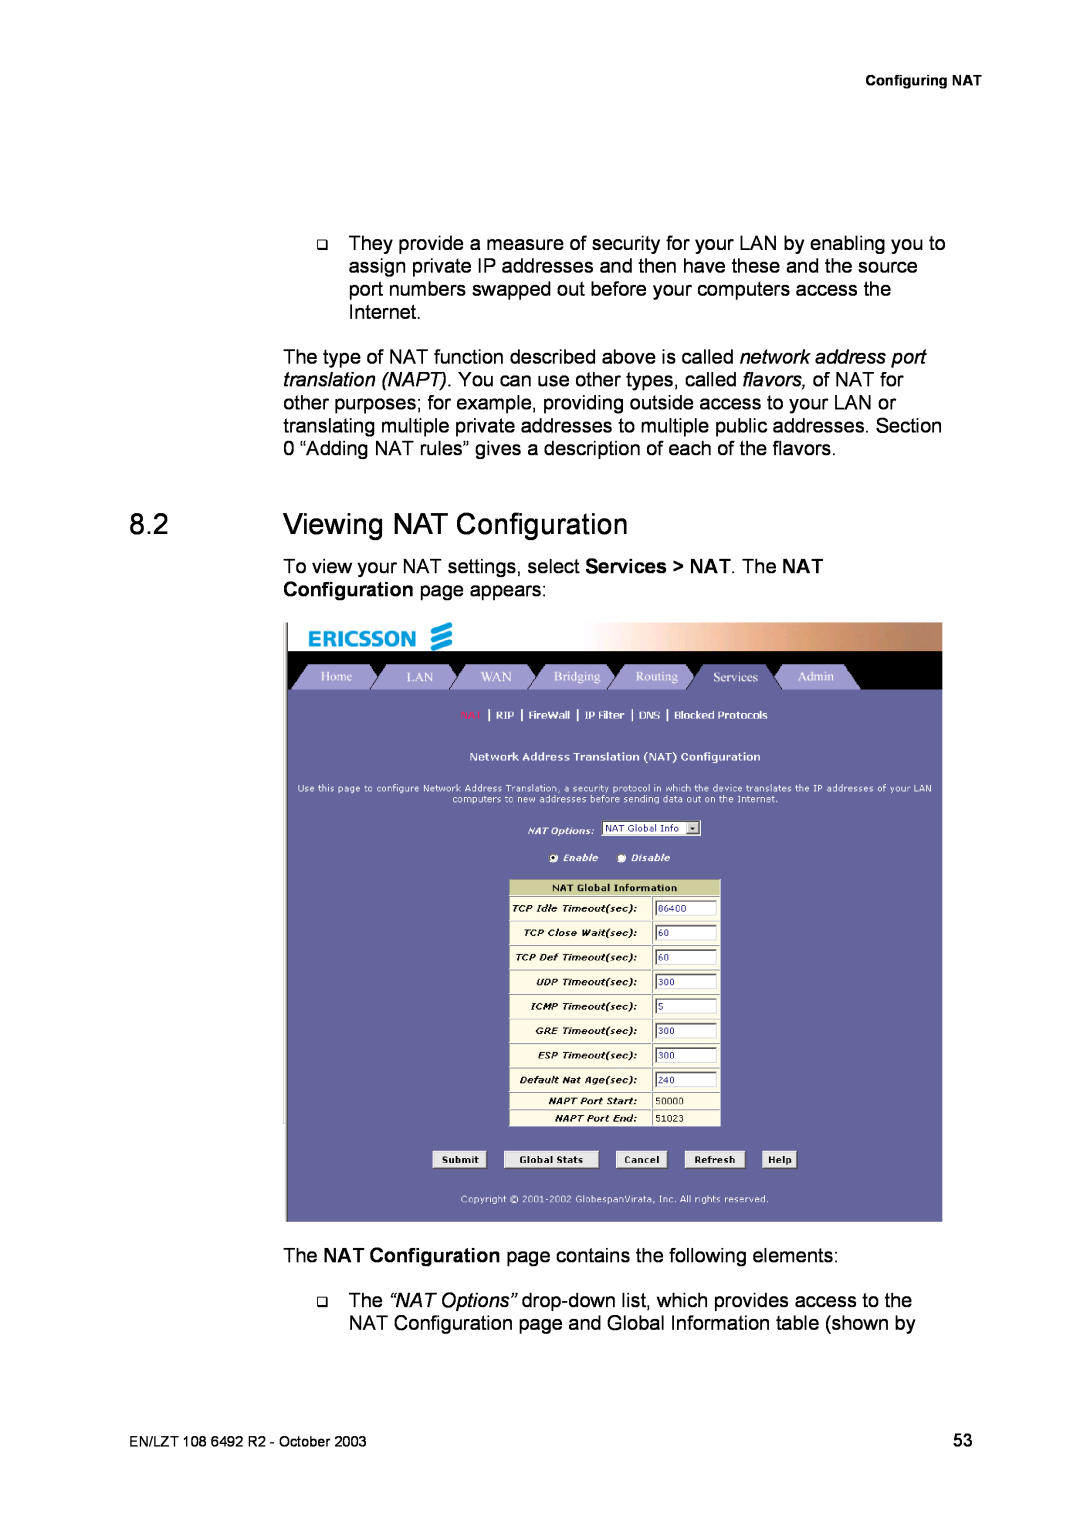 Garmin HM210DP/DI manual Viewing NAT Configuration, Configuration page appears 